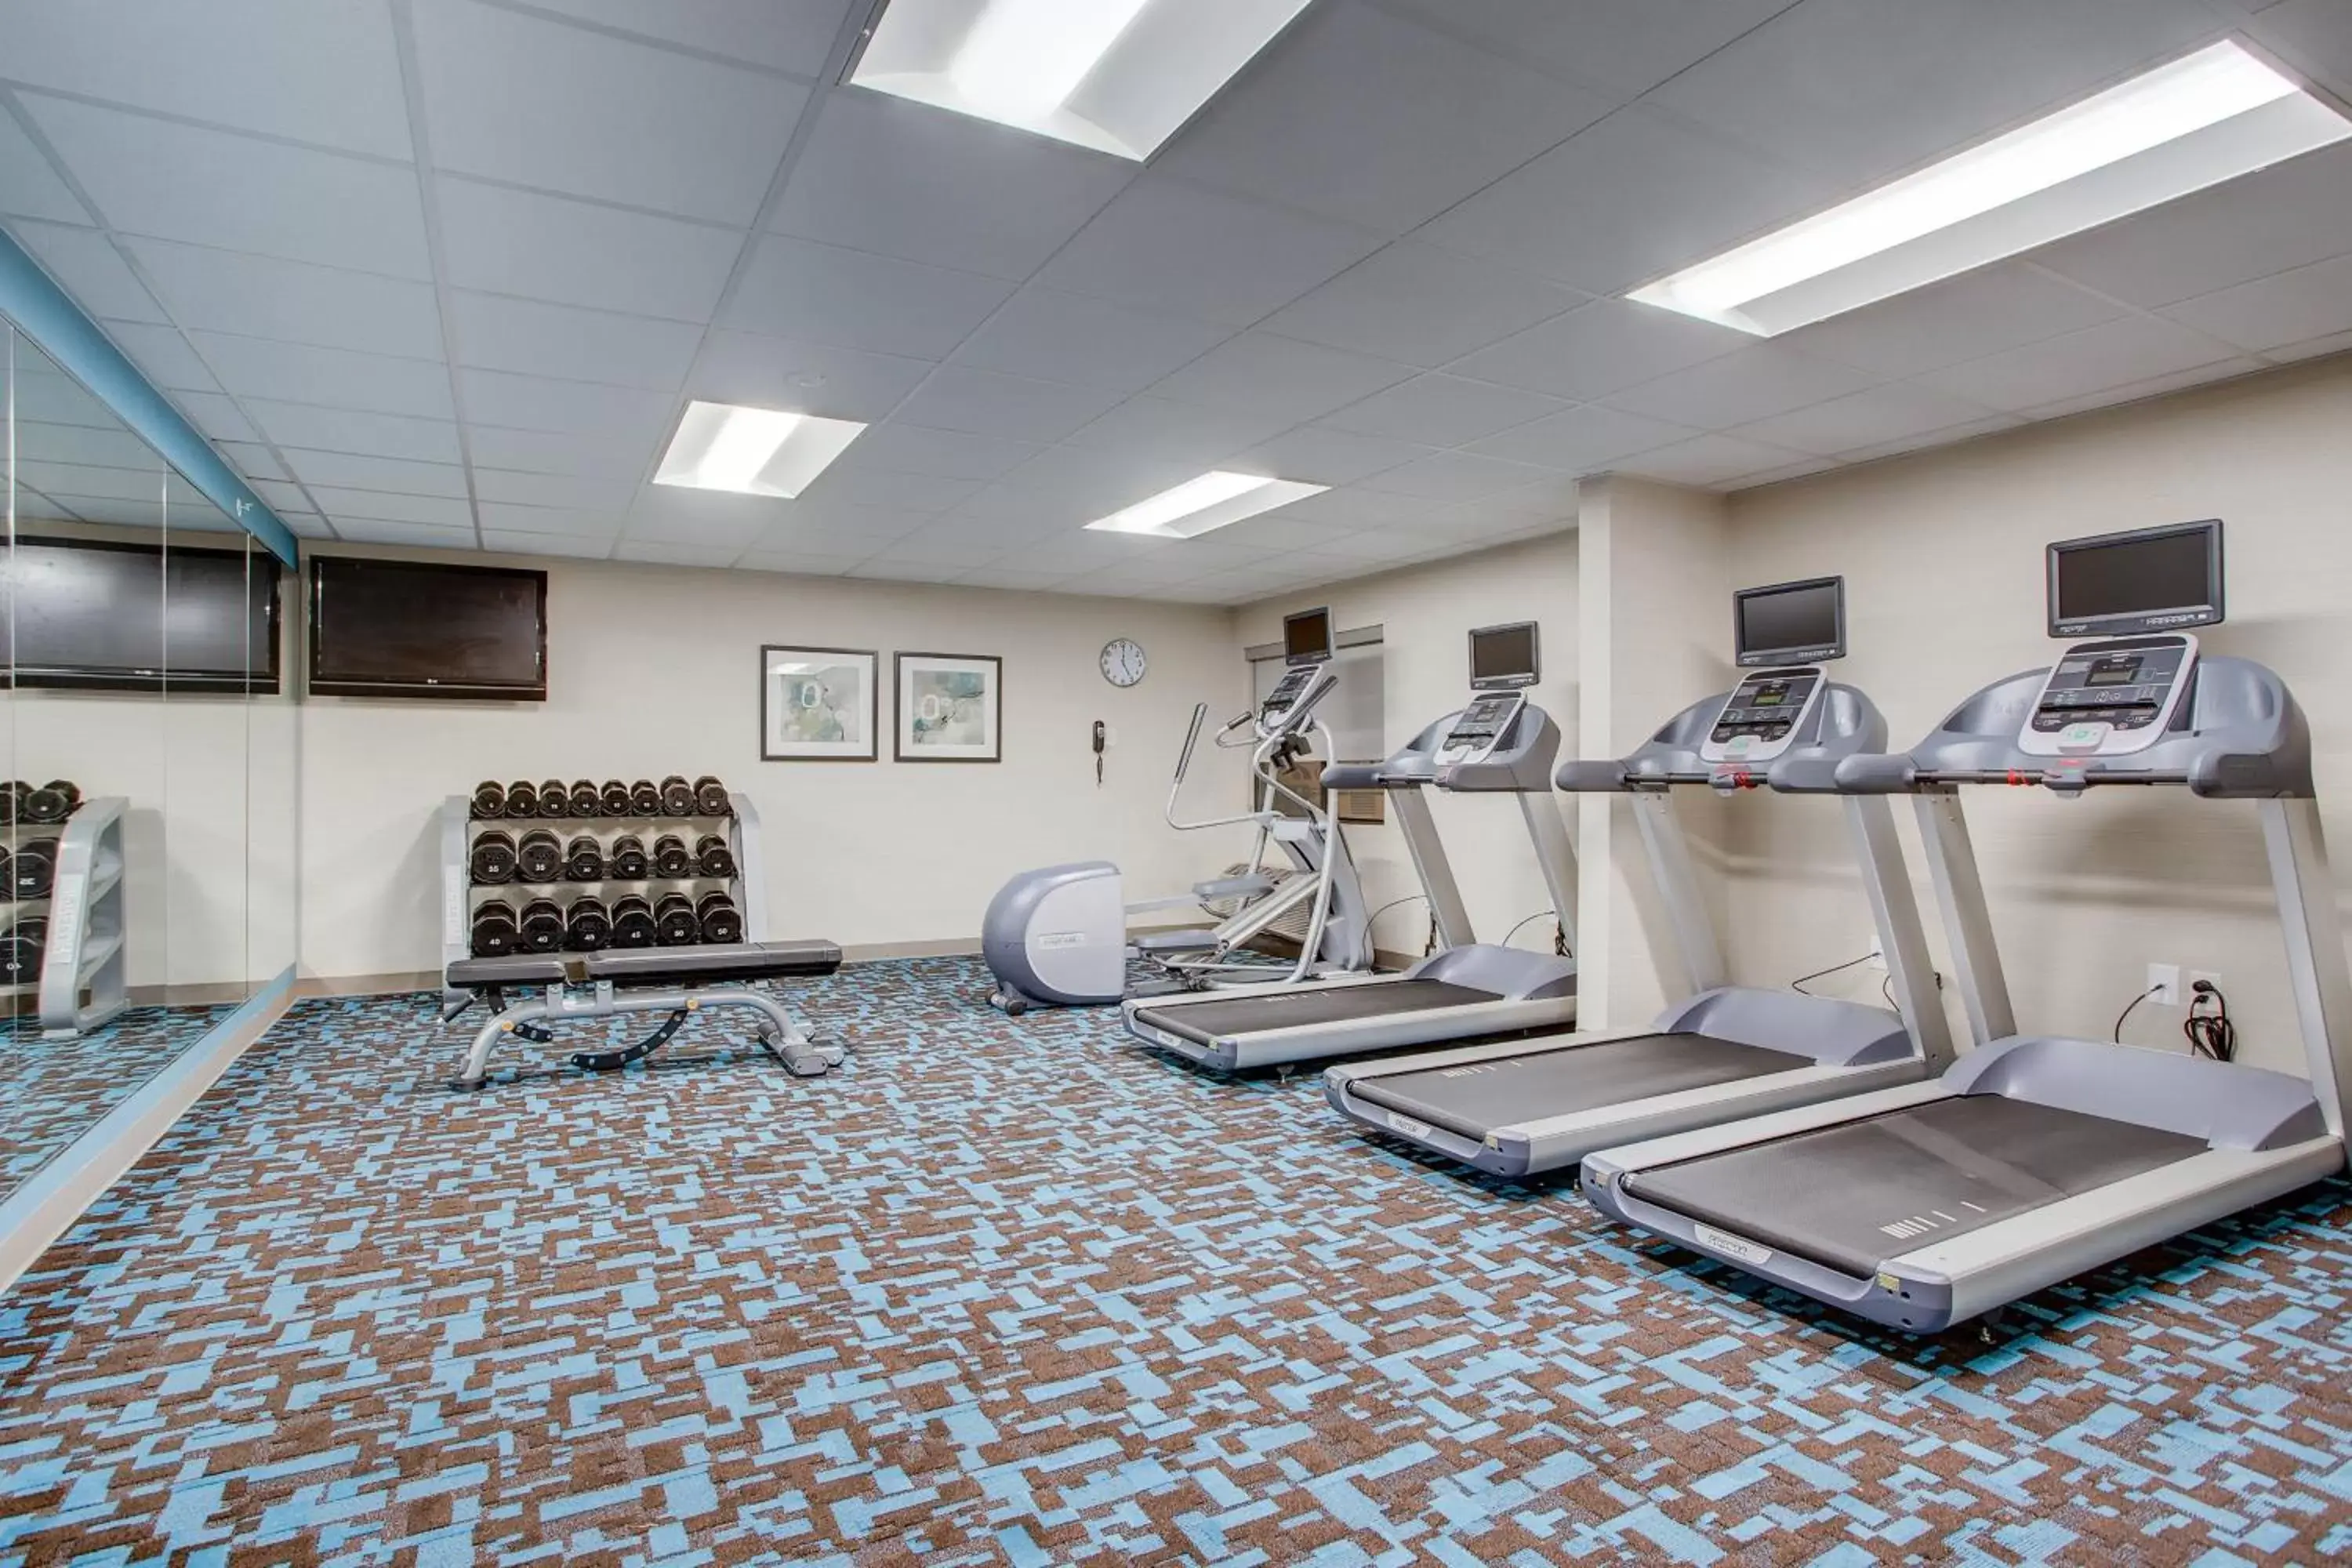 Fitness centre/facilities, Fitness Center/Facilities in Fairfield Inn Portsmouth Seacoast